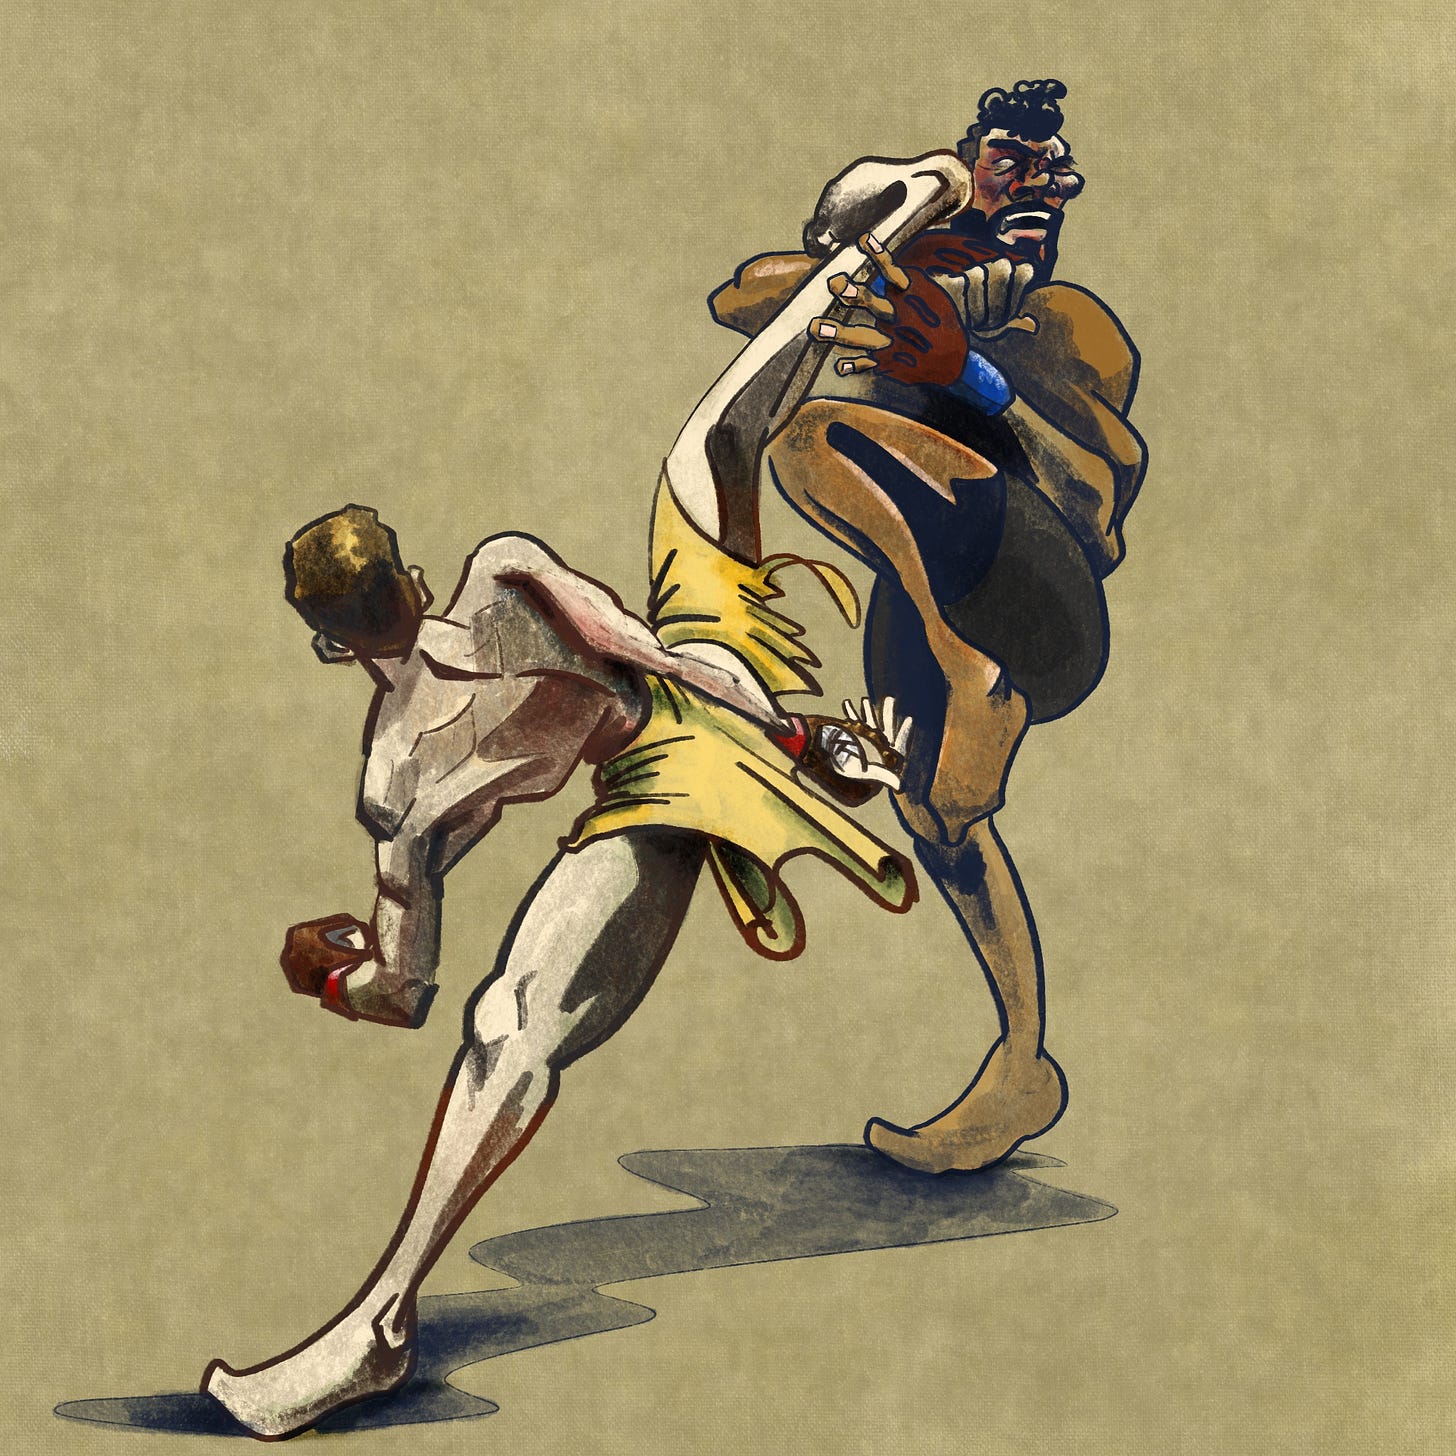 Illustration of Marlon Vera fighting Rob Font.